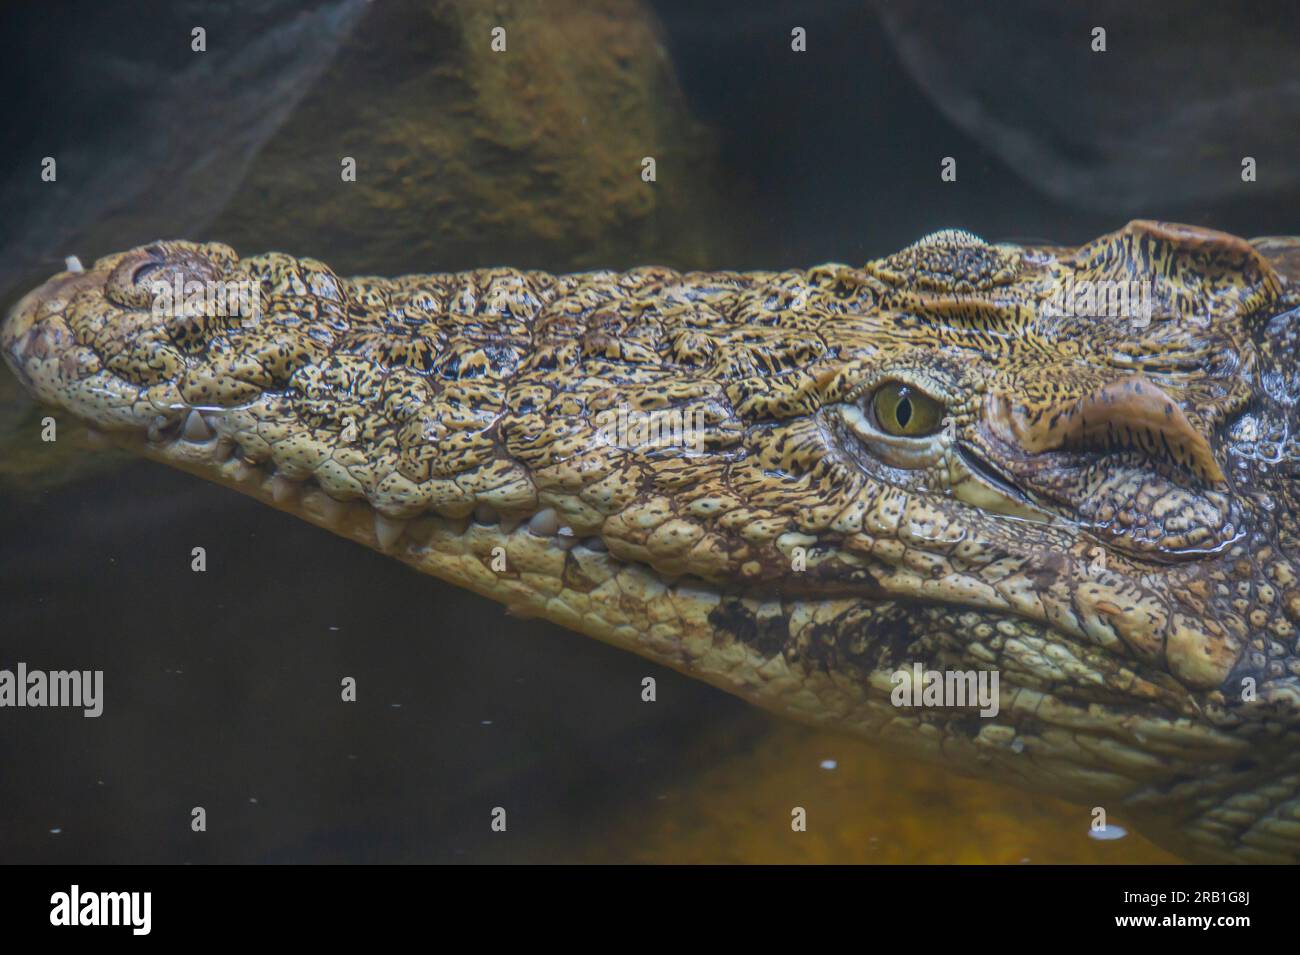 A Cuban crocodile Crocodylus Rhombifer is a small species of crocodile endemic to Cuba. Crocodile head up close. Crocodile swimming in water - head on Stock Photo